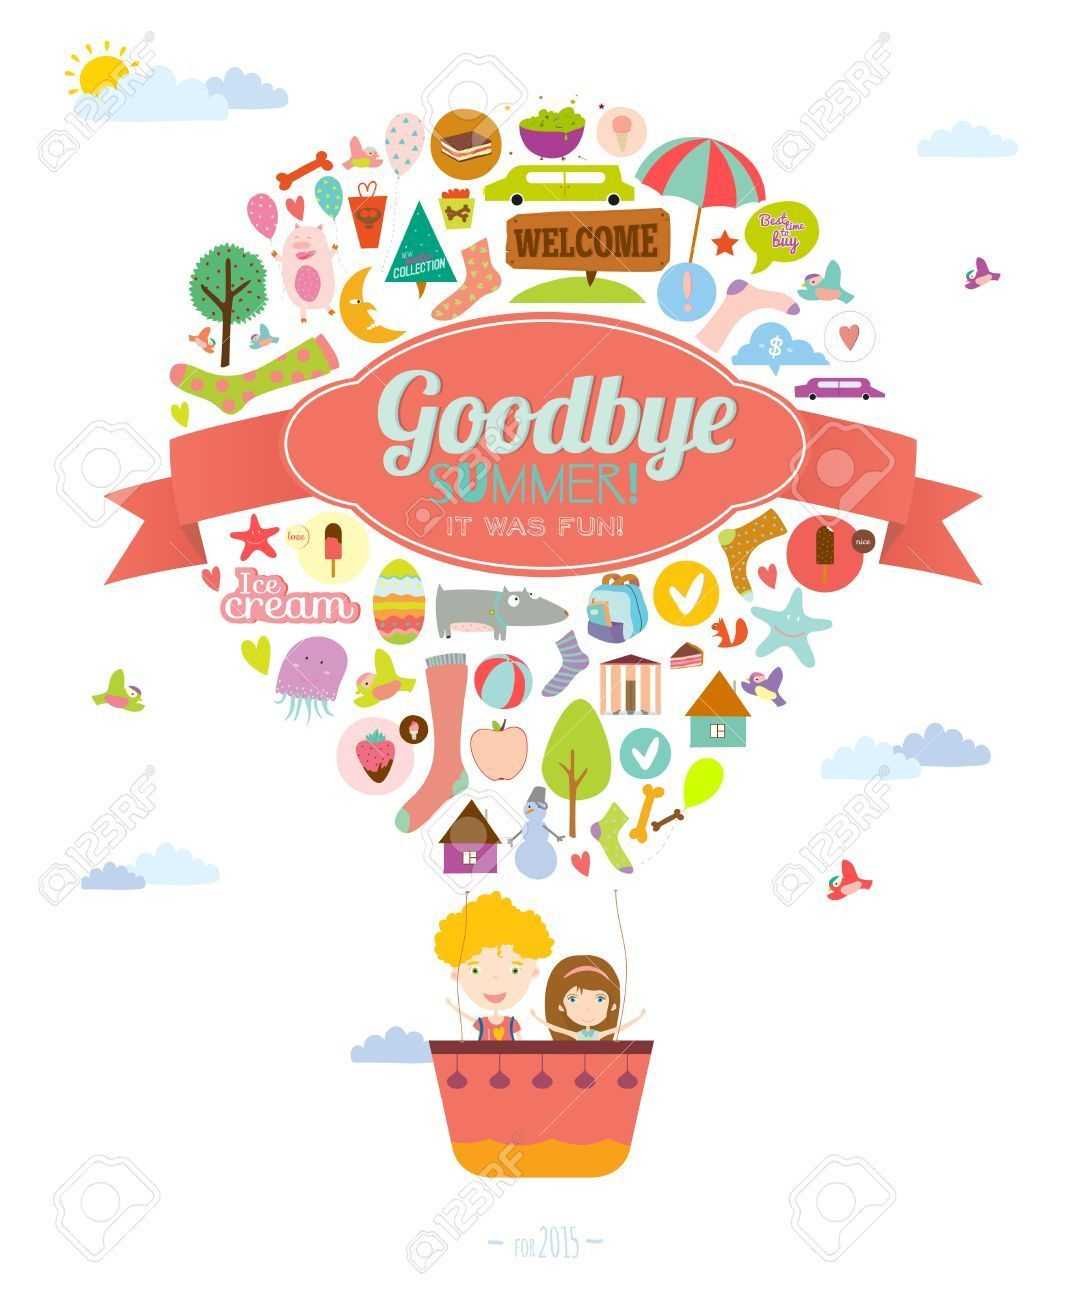 Top Printable Good Bye Cards | Graham Website Inside Goodbye Card Template